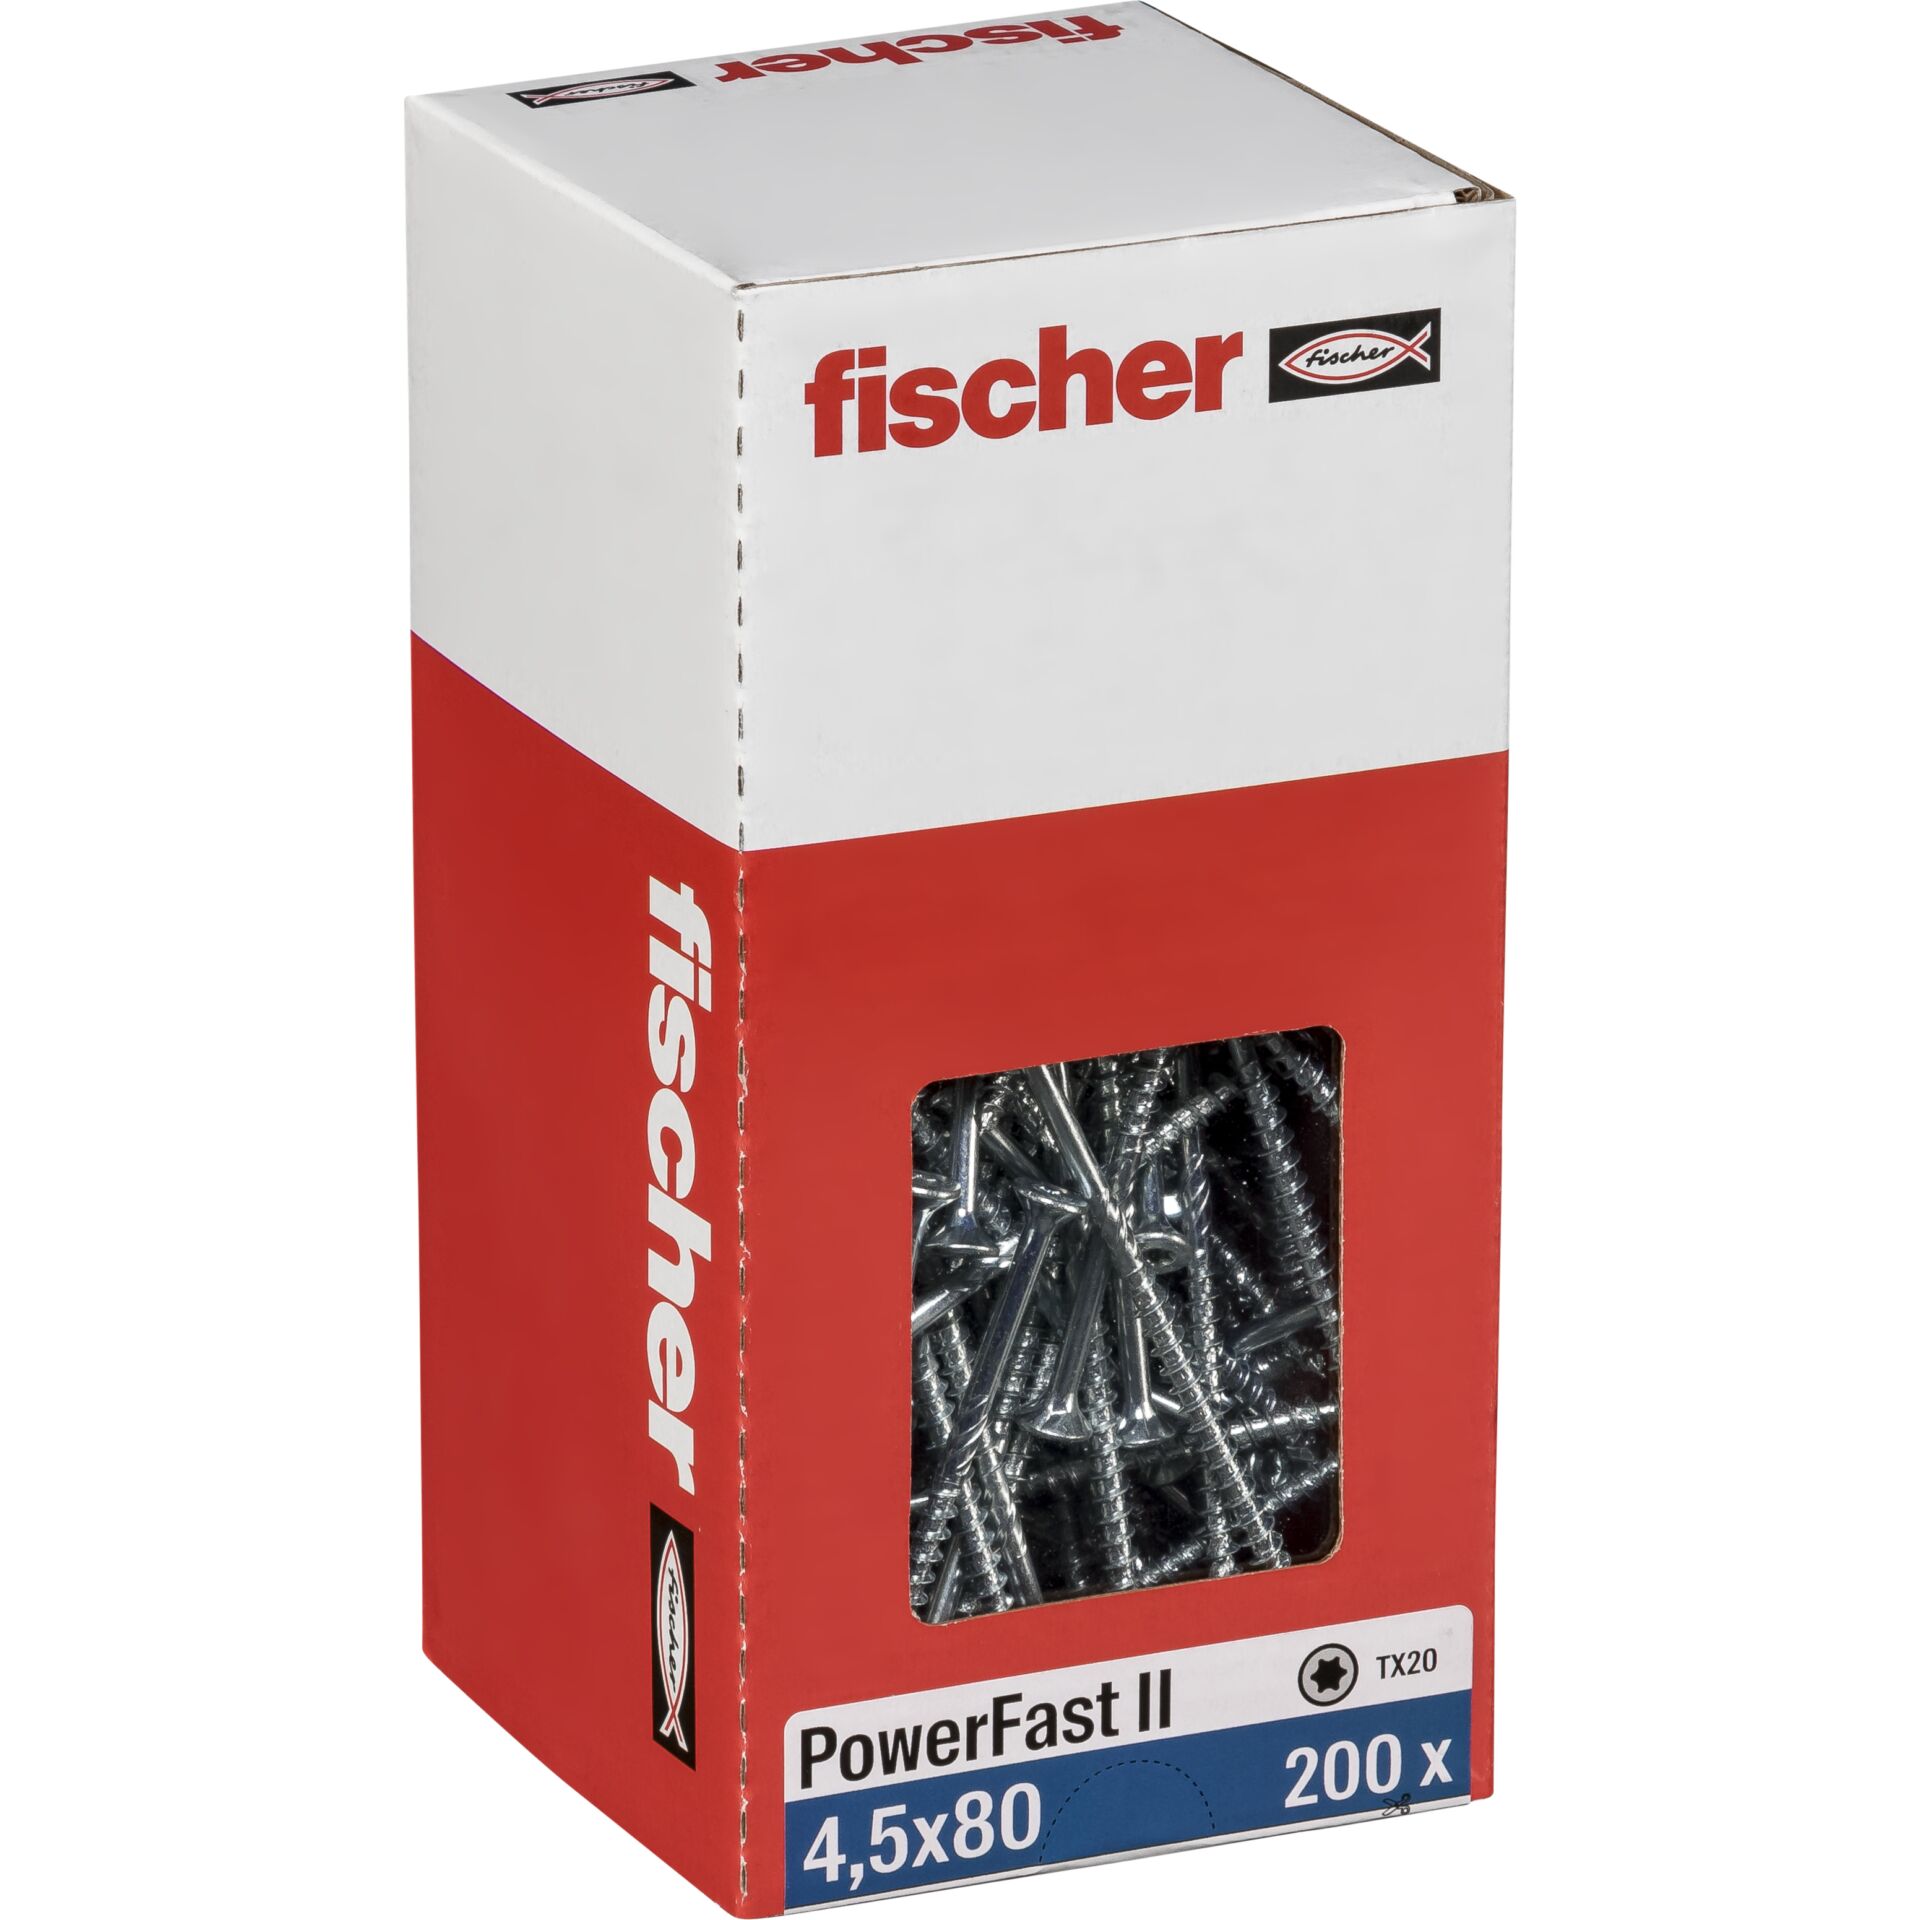 Fischer PowerFast II 4,5x80 SK TX TG blvz 200